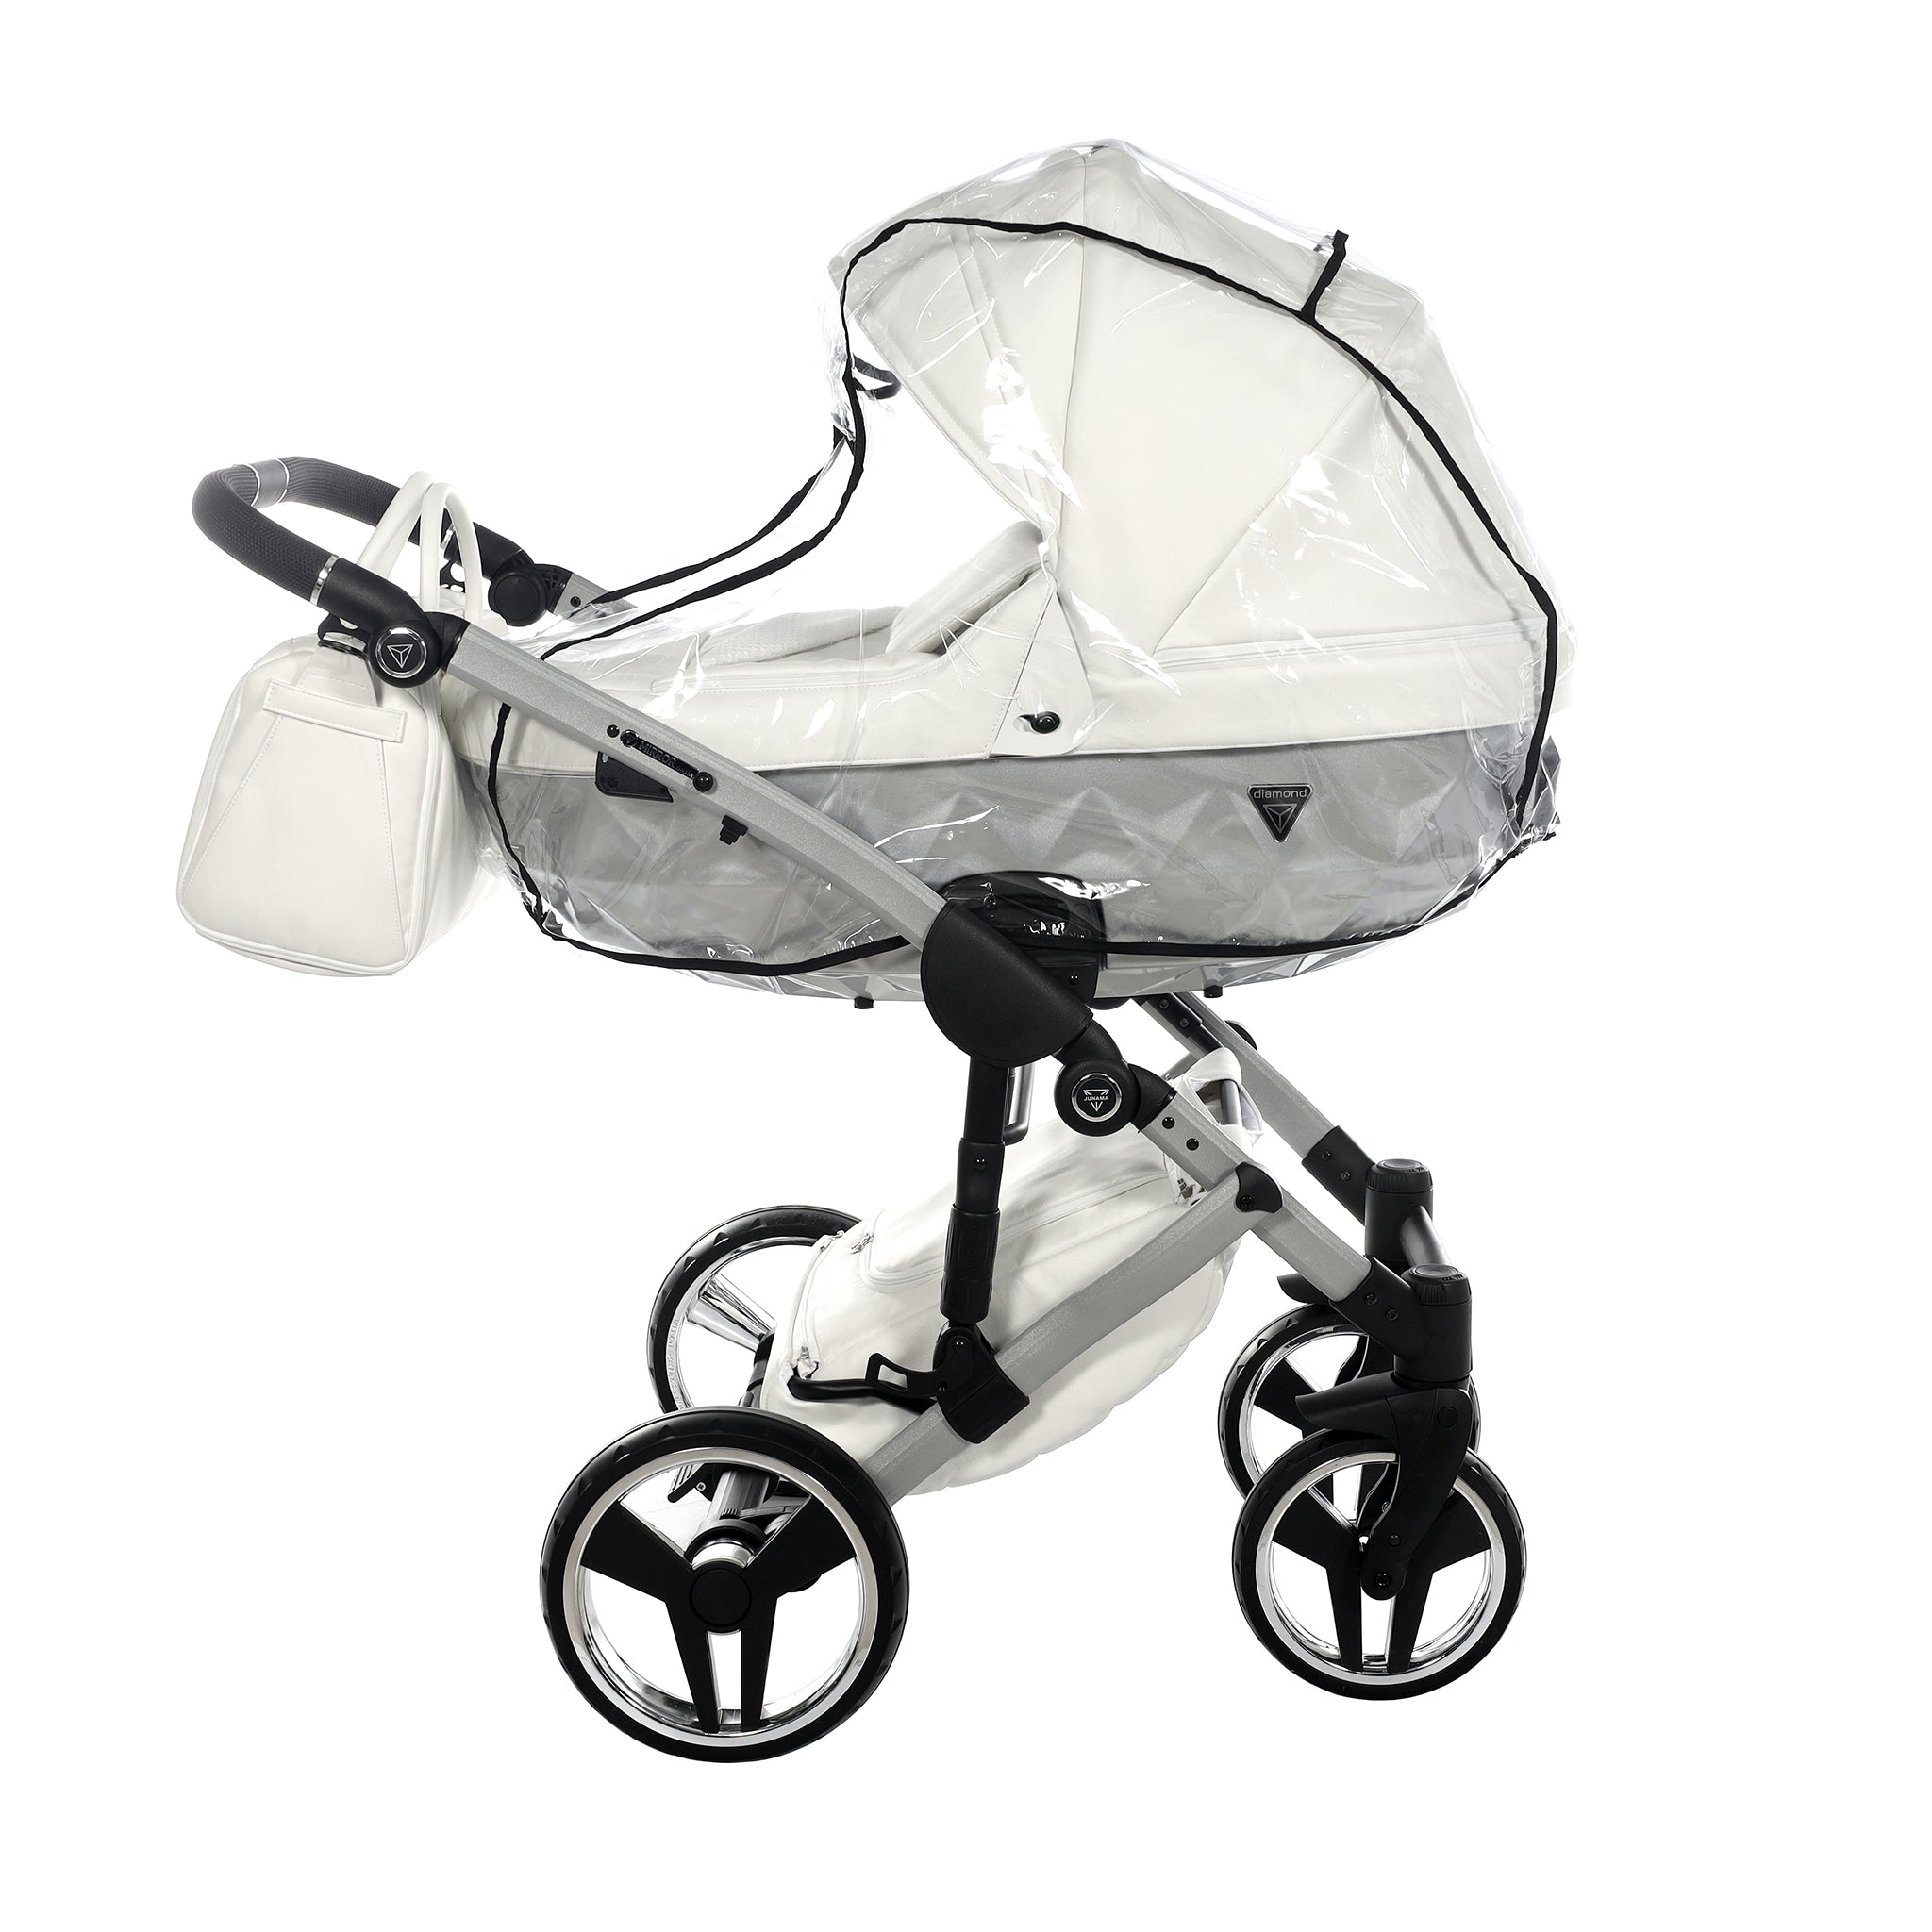 Junama Mirror Satin, baby prams or stroller 2 in 1 - Silver and Silver, Code number: JUNMSAT04